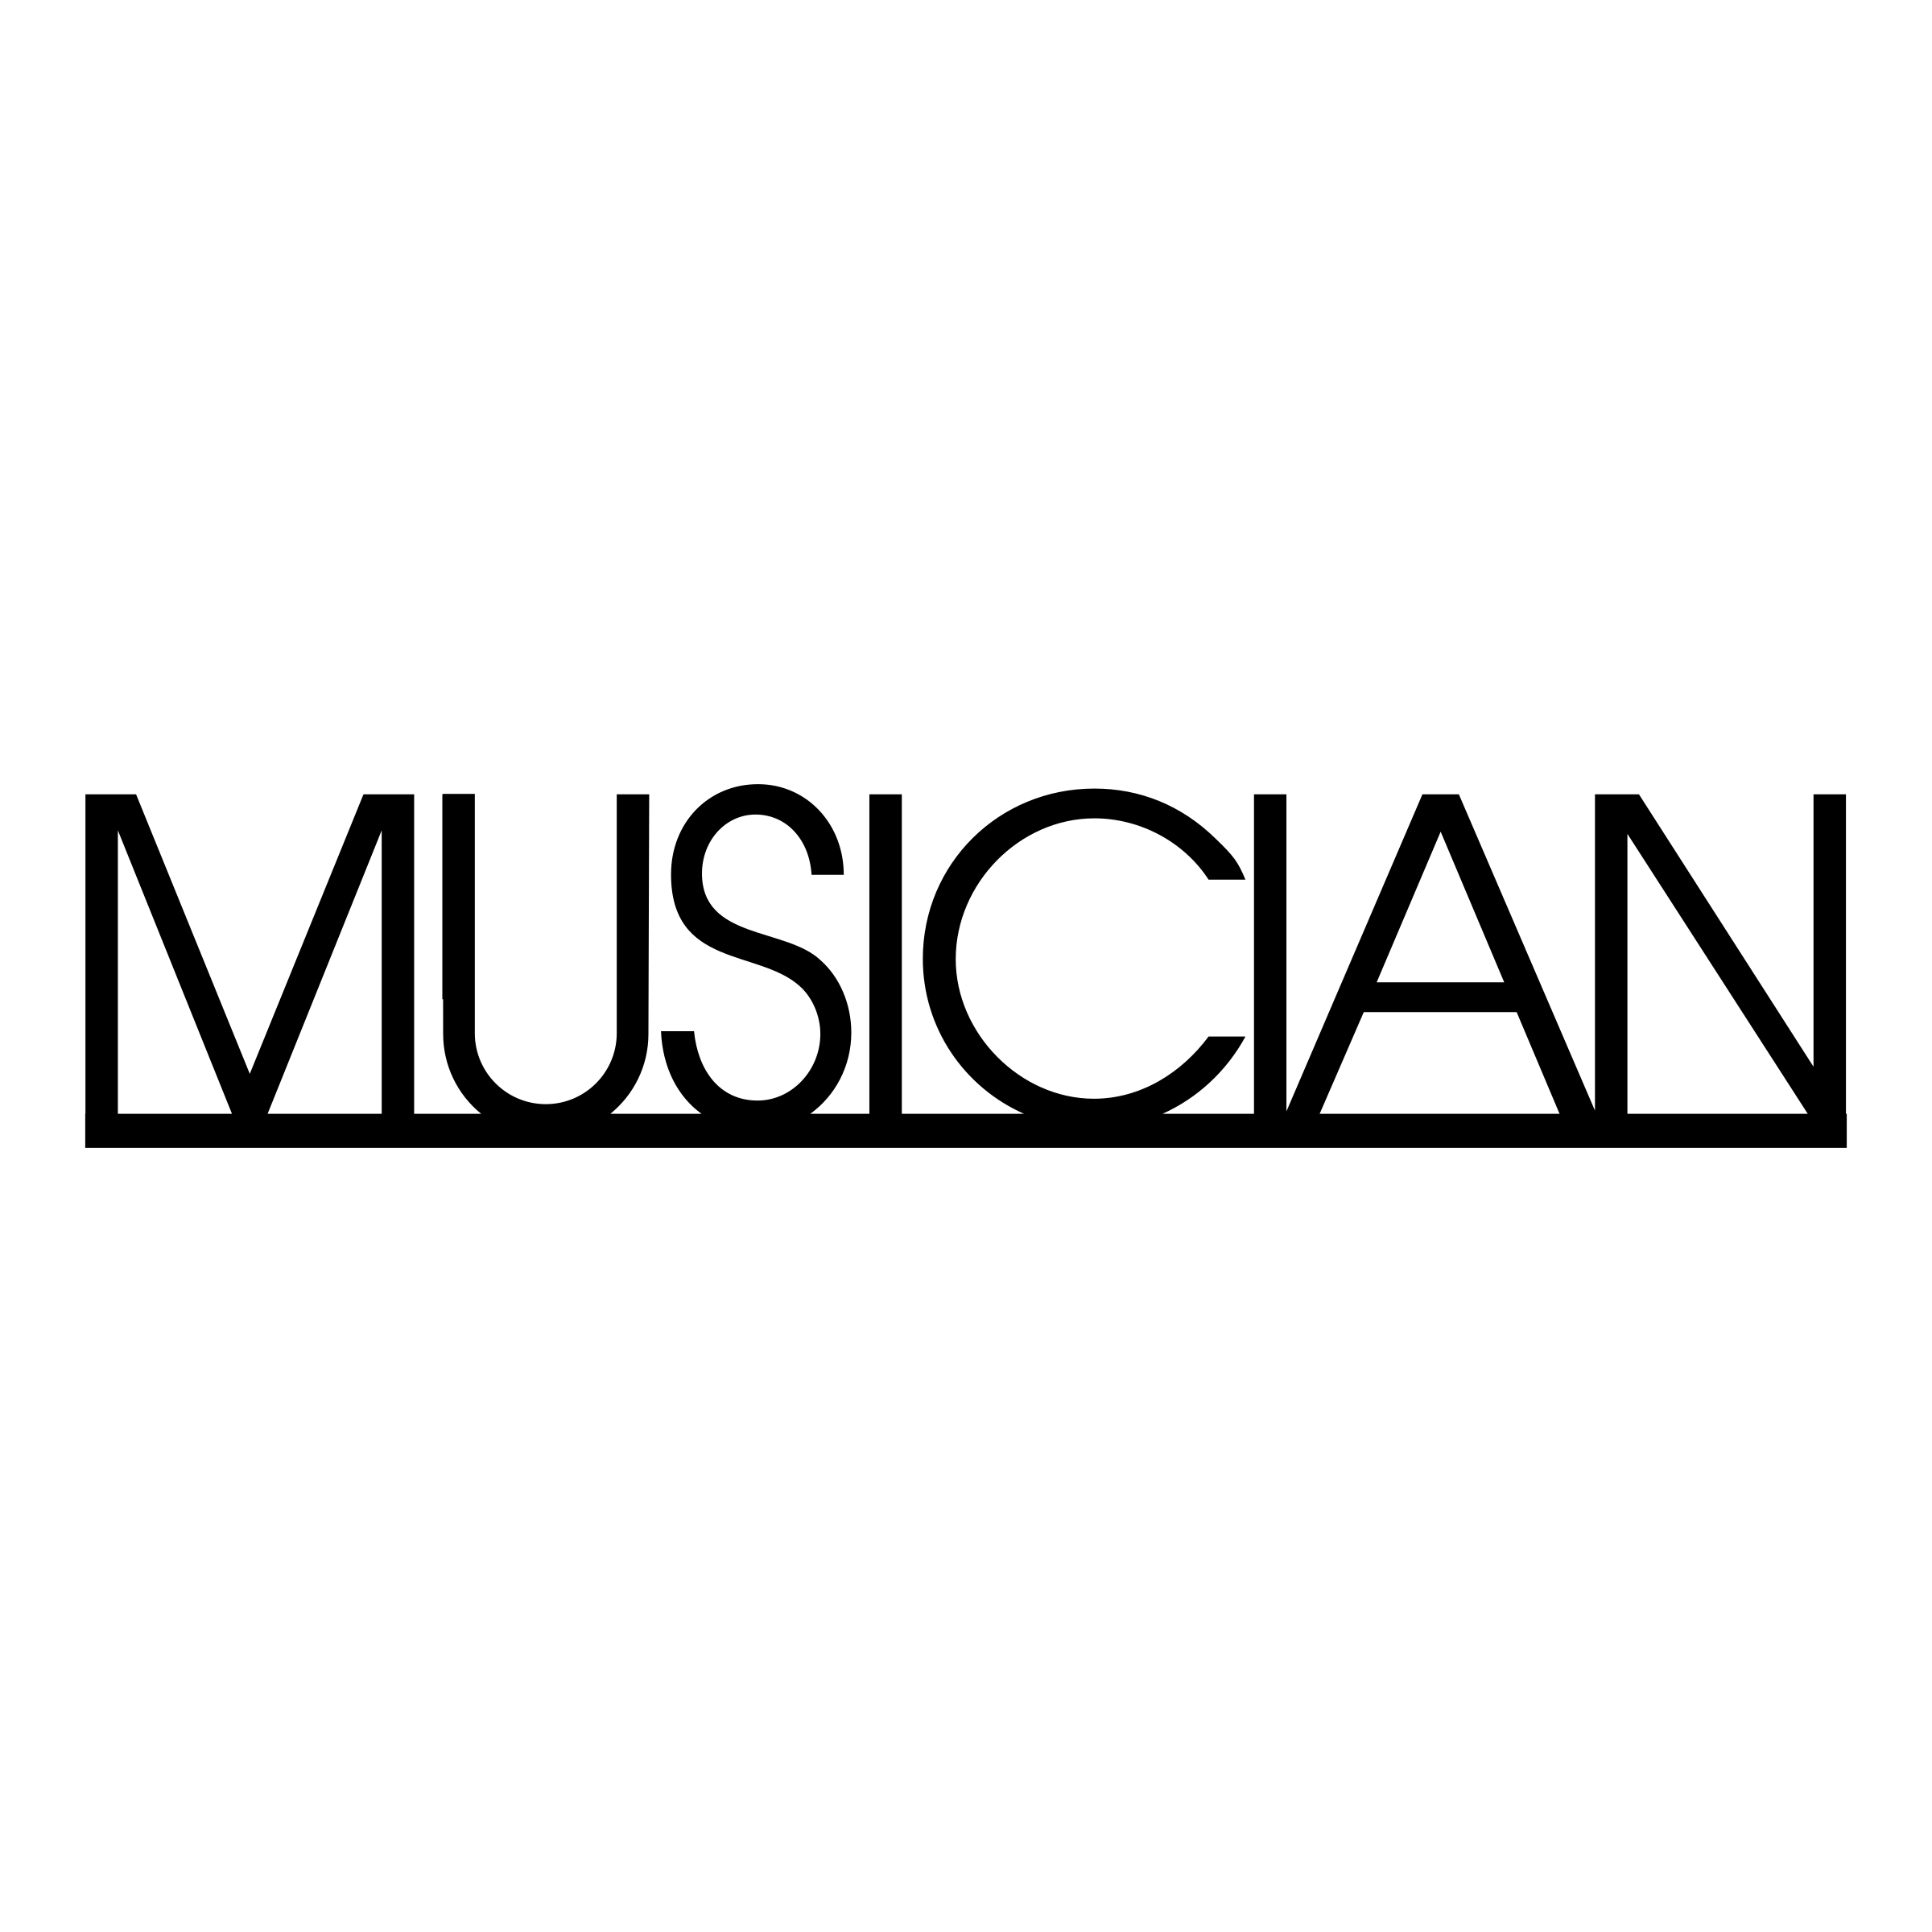 Musician Logo - Musician Logo PNG Transparent & SVG Vector